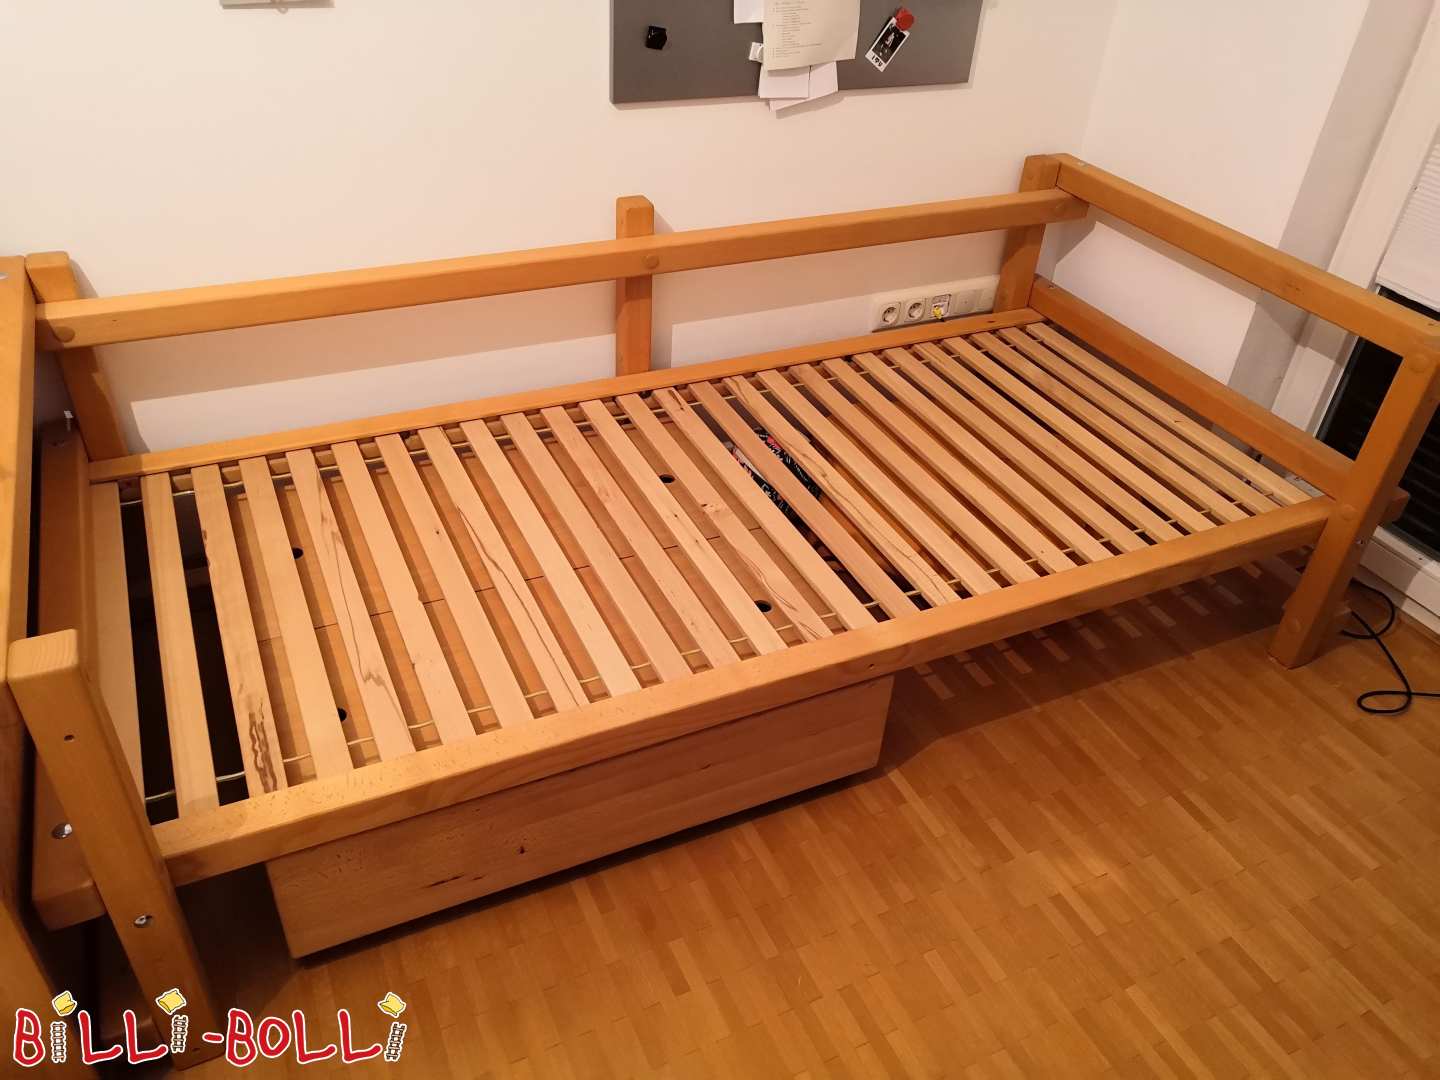 2 llits juvenils baixos, Munic (Categoria: Mobiliari infantil usat)